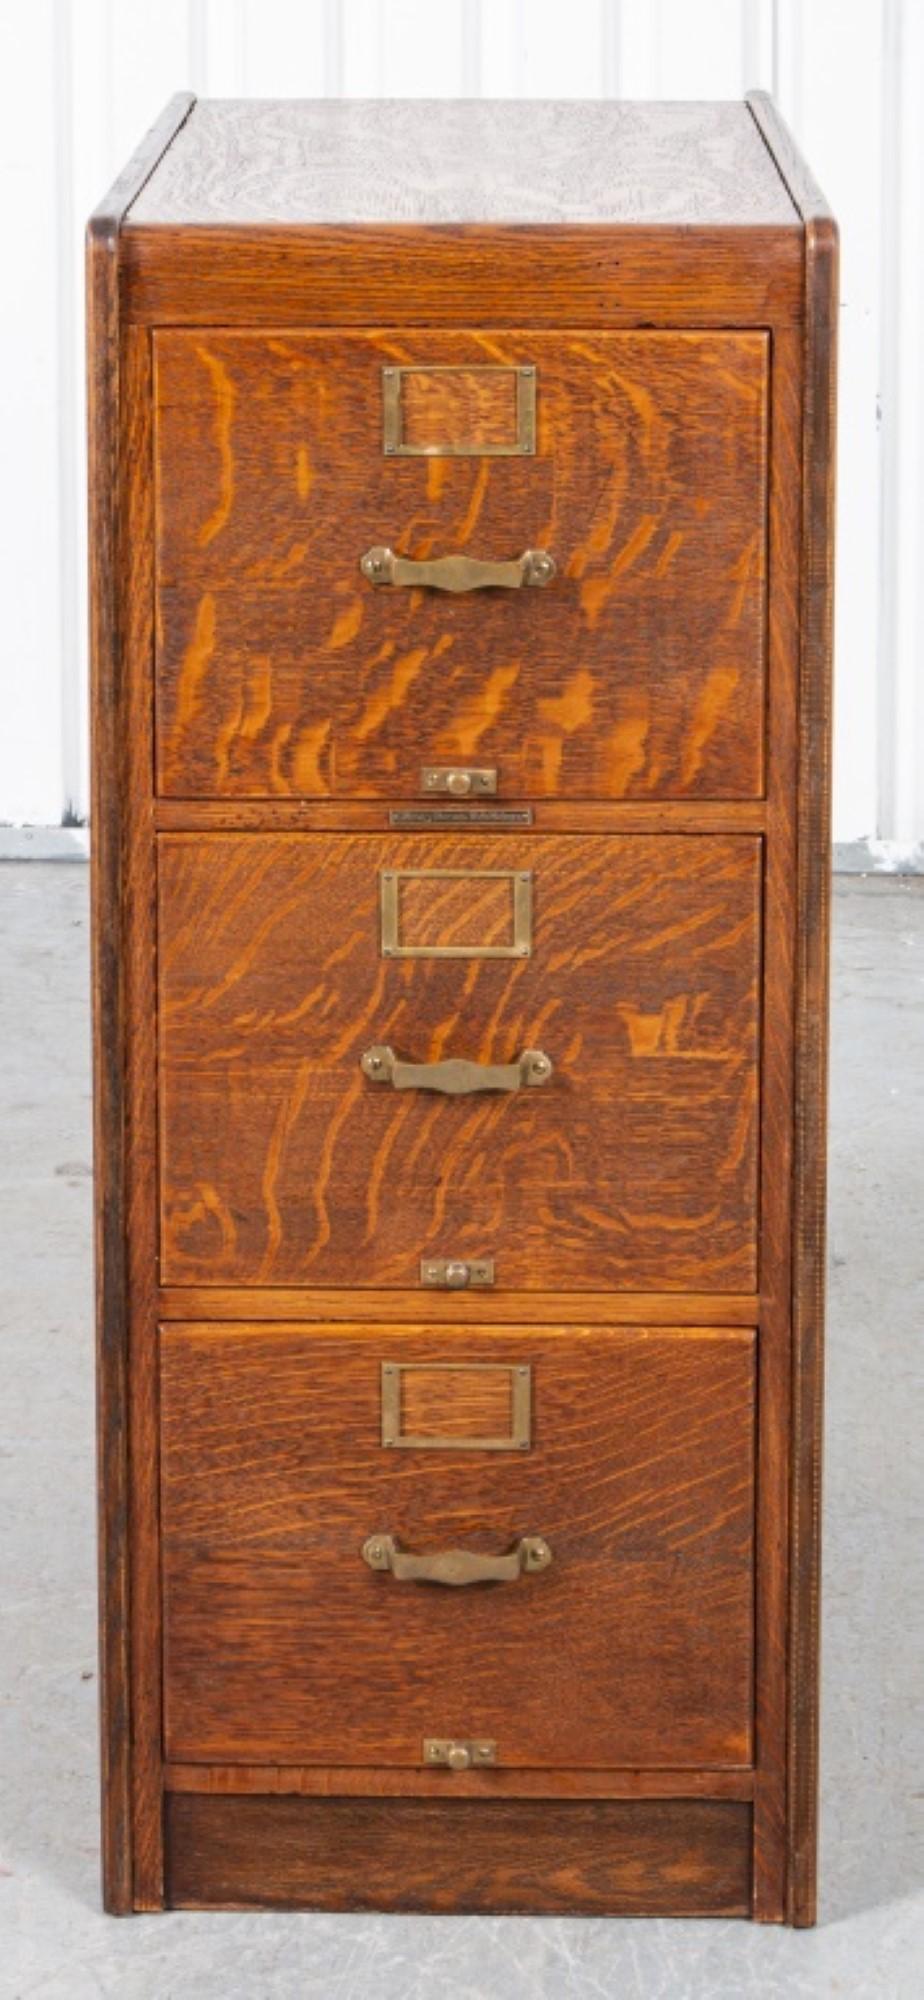 American Craftsman filing cabinet in wood. 42